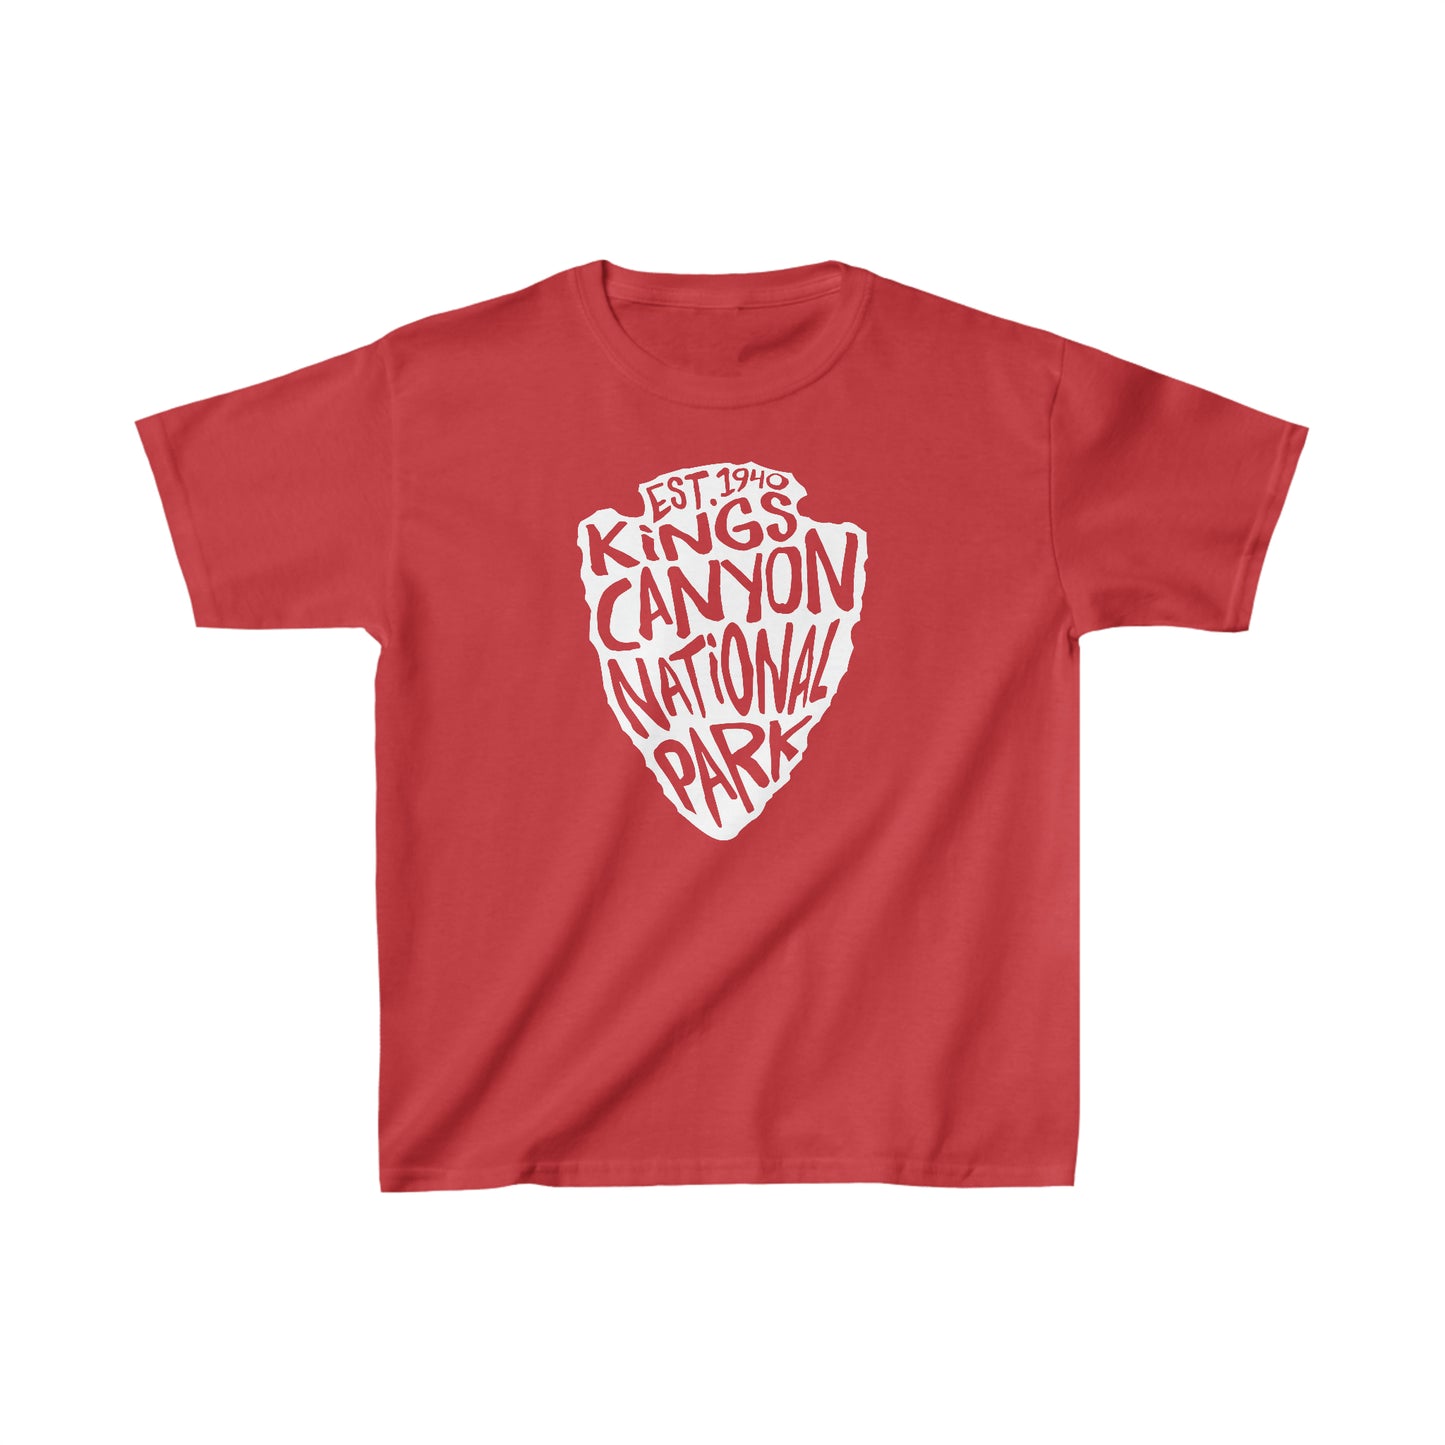 Kings Canyon National Park Child T-Shirt - Arrowhead Design